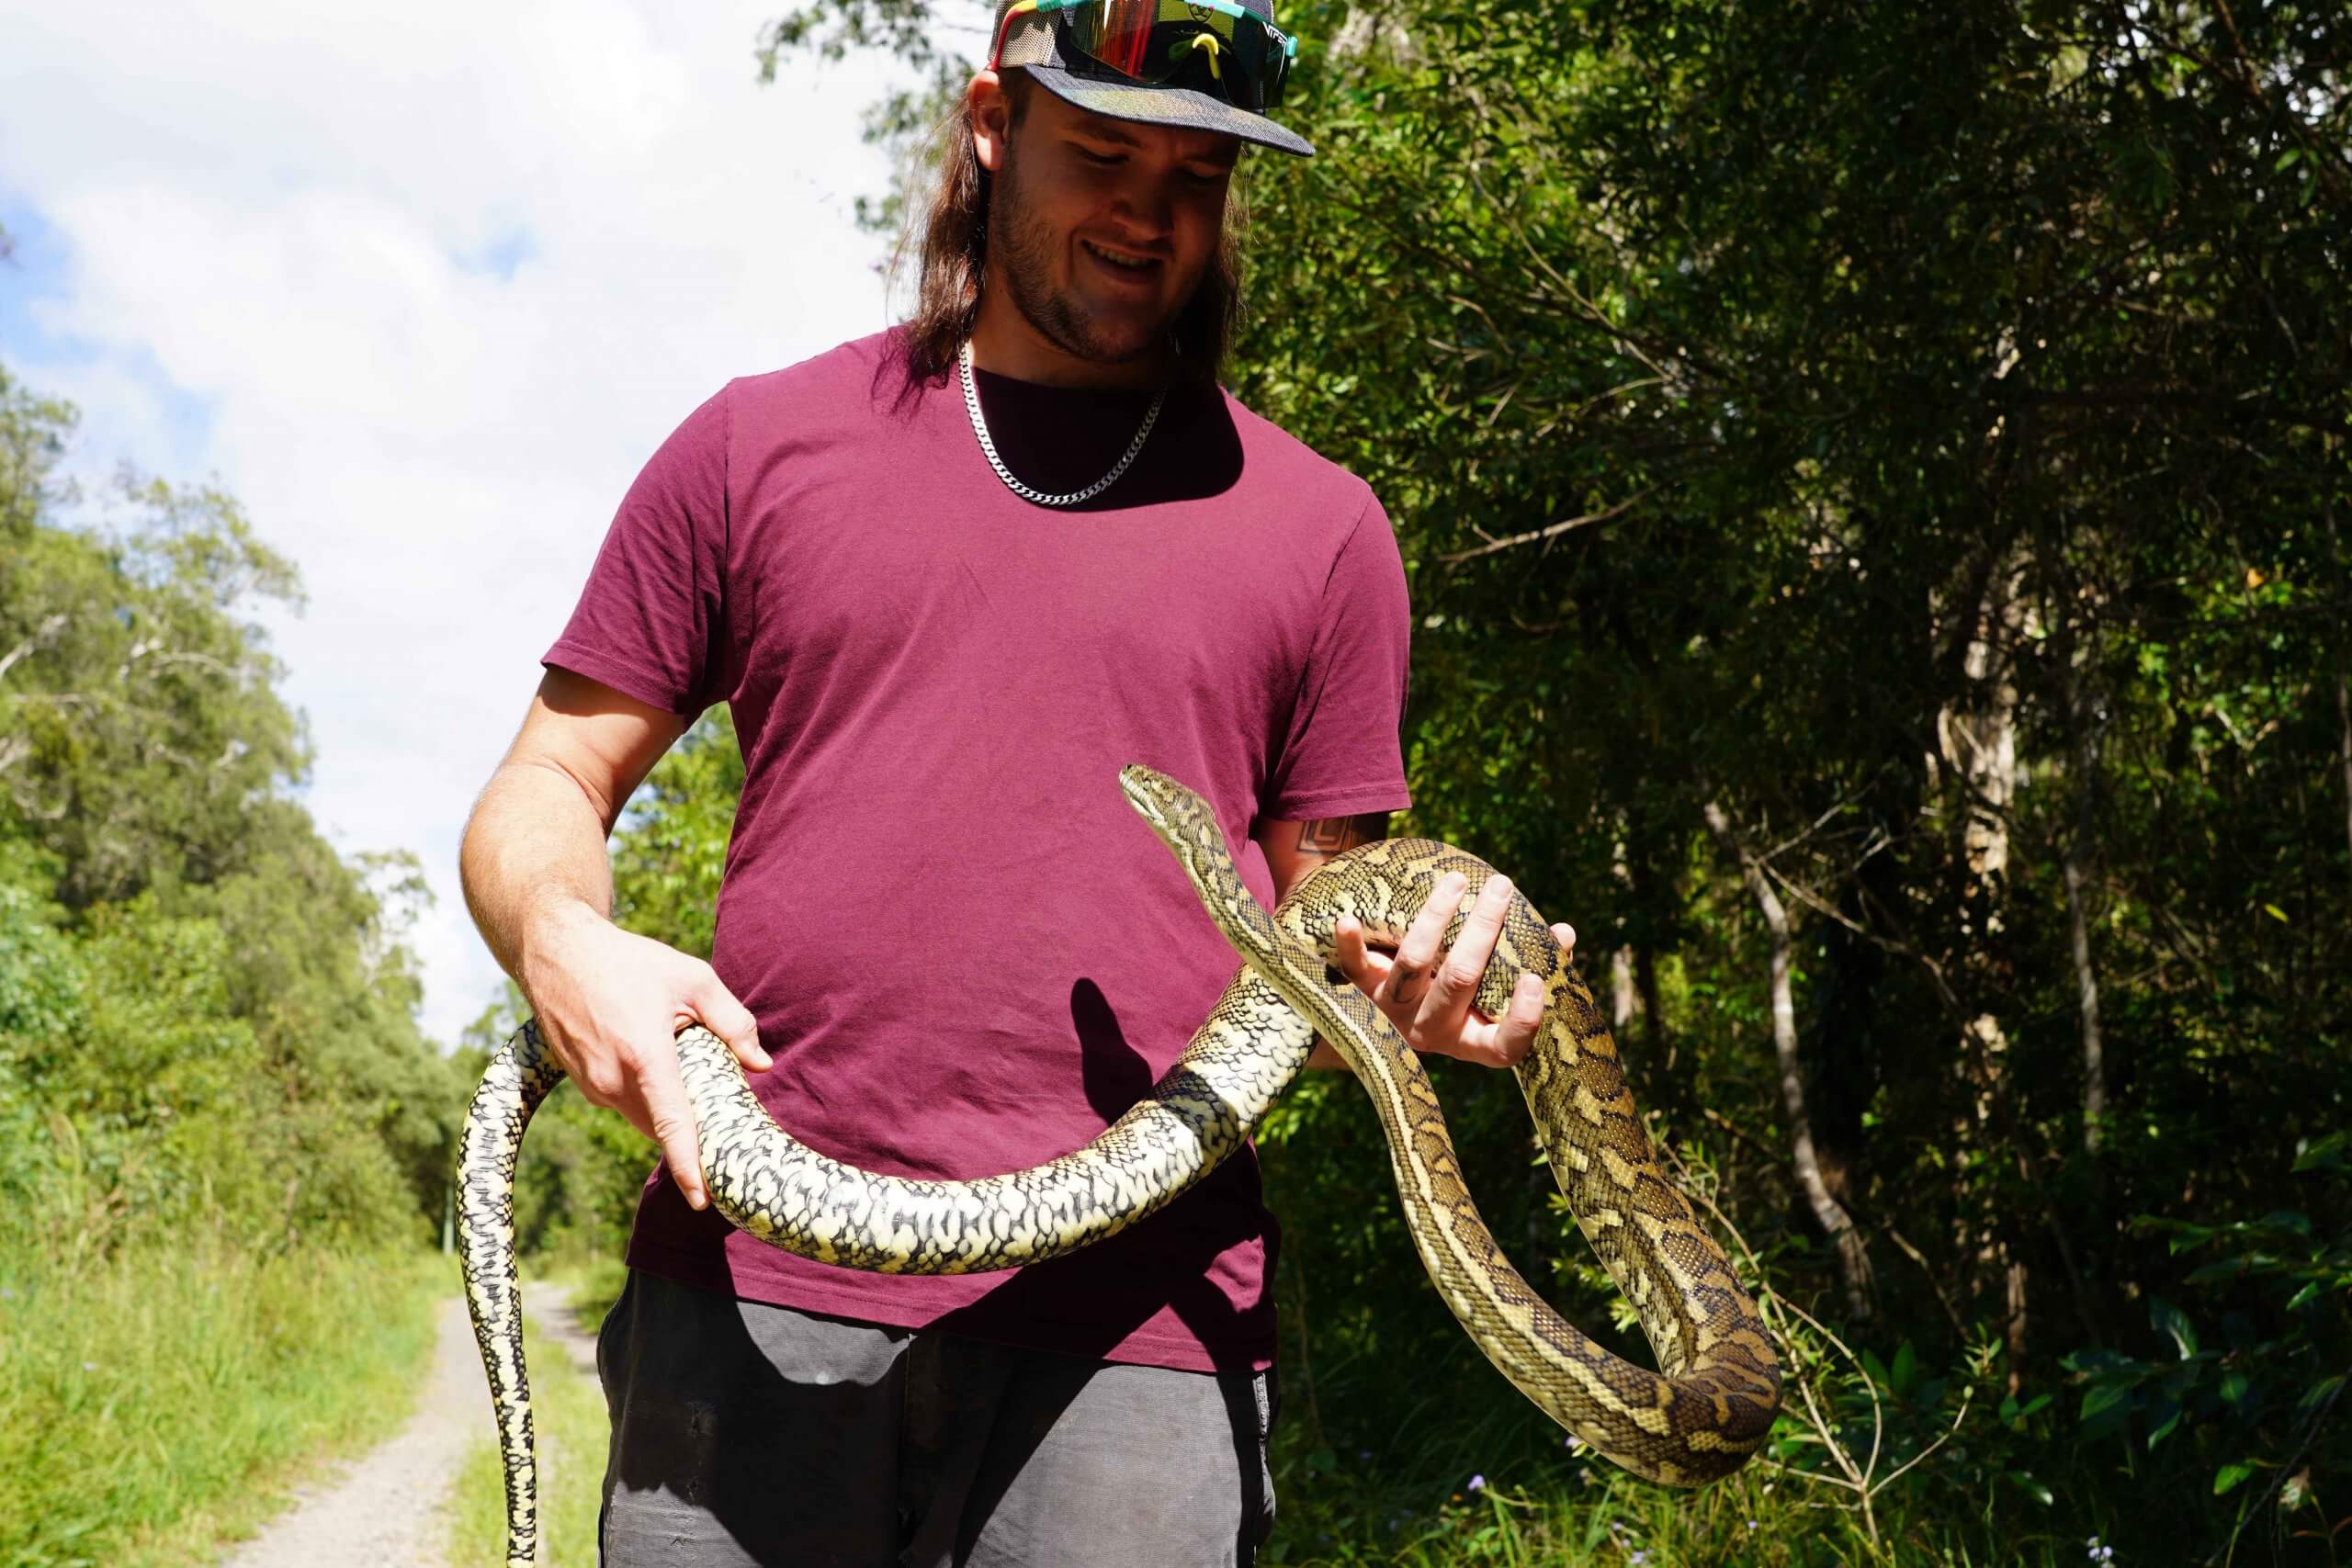 Harley handling non venomous carpet python on snake catching tour